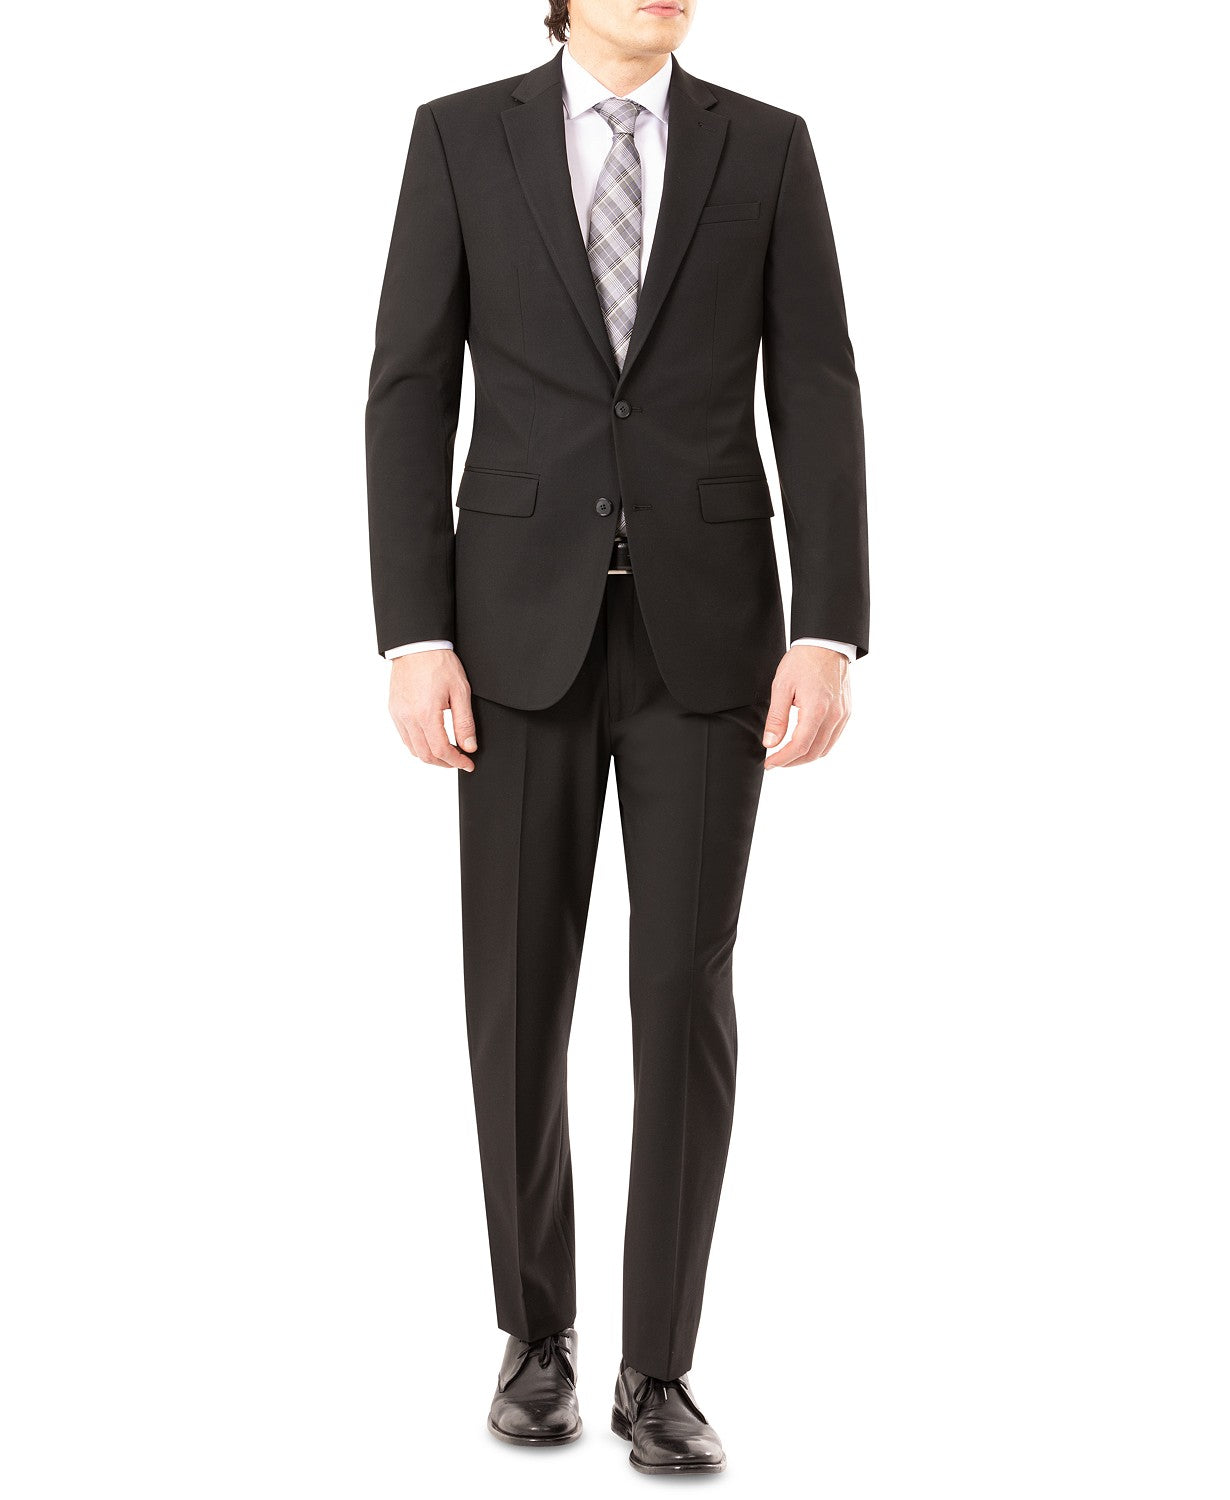 IZOD Men's Classic-Fit Suit Jacket Solid Black 46R JACKET ONLY